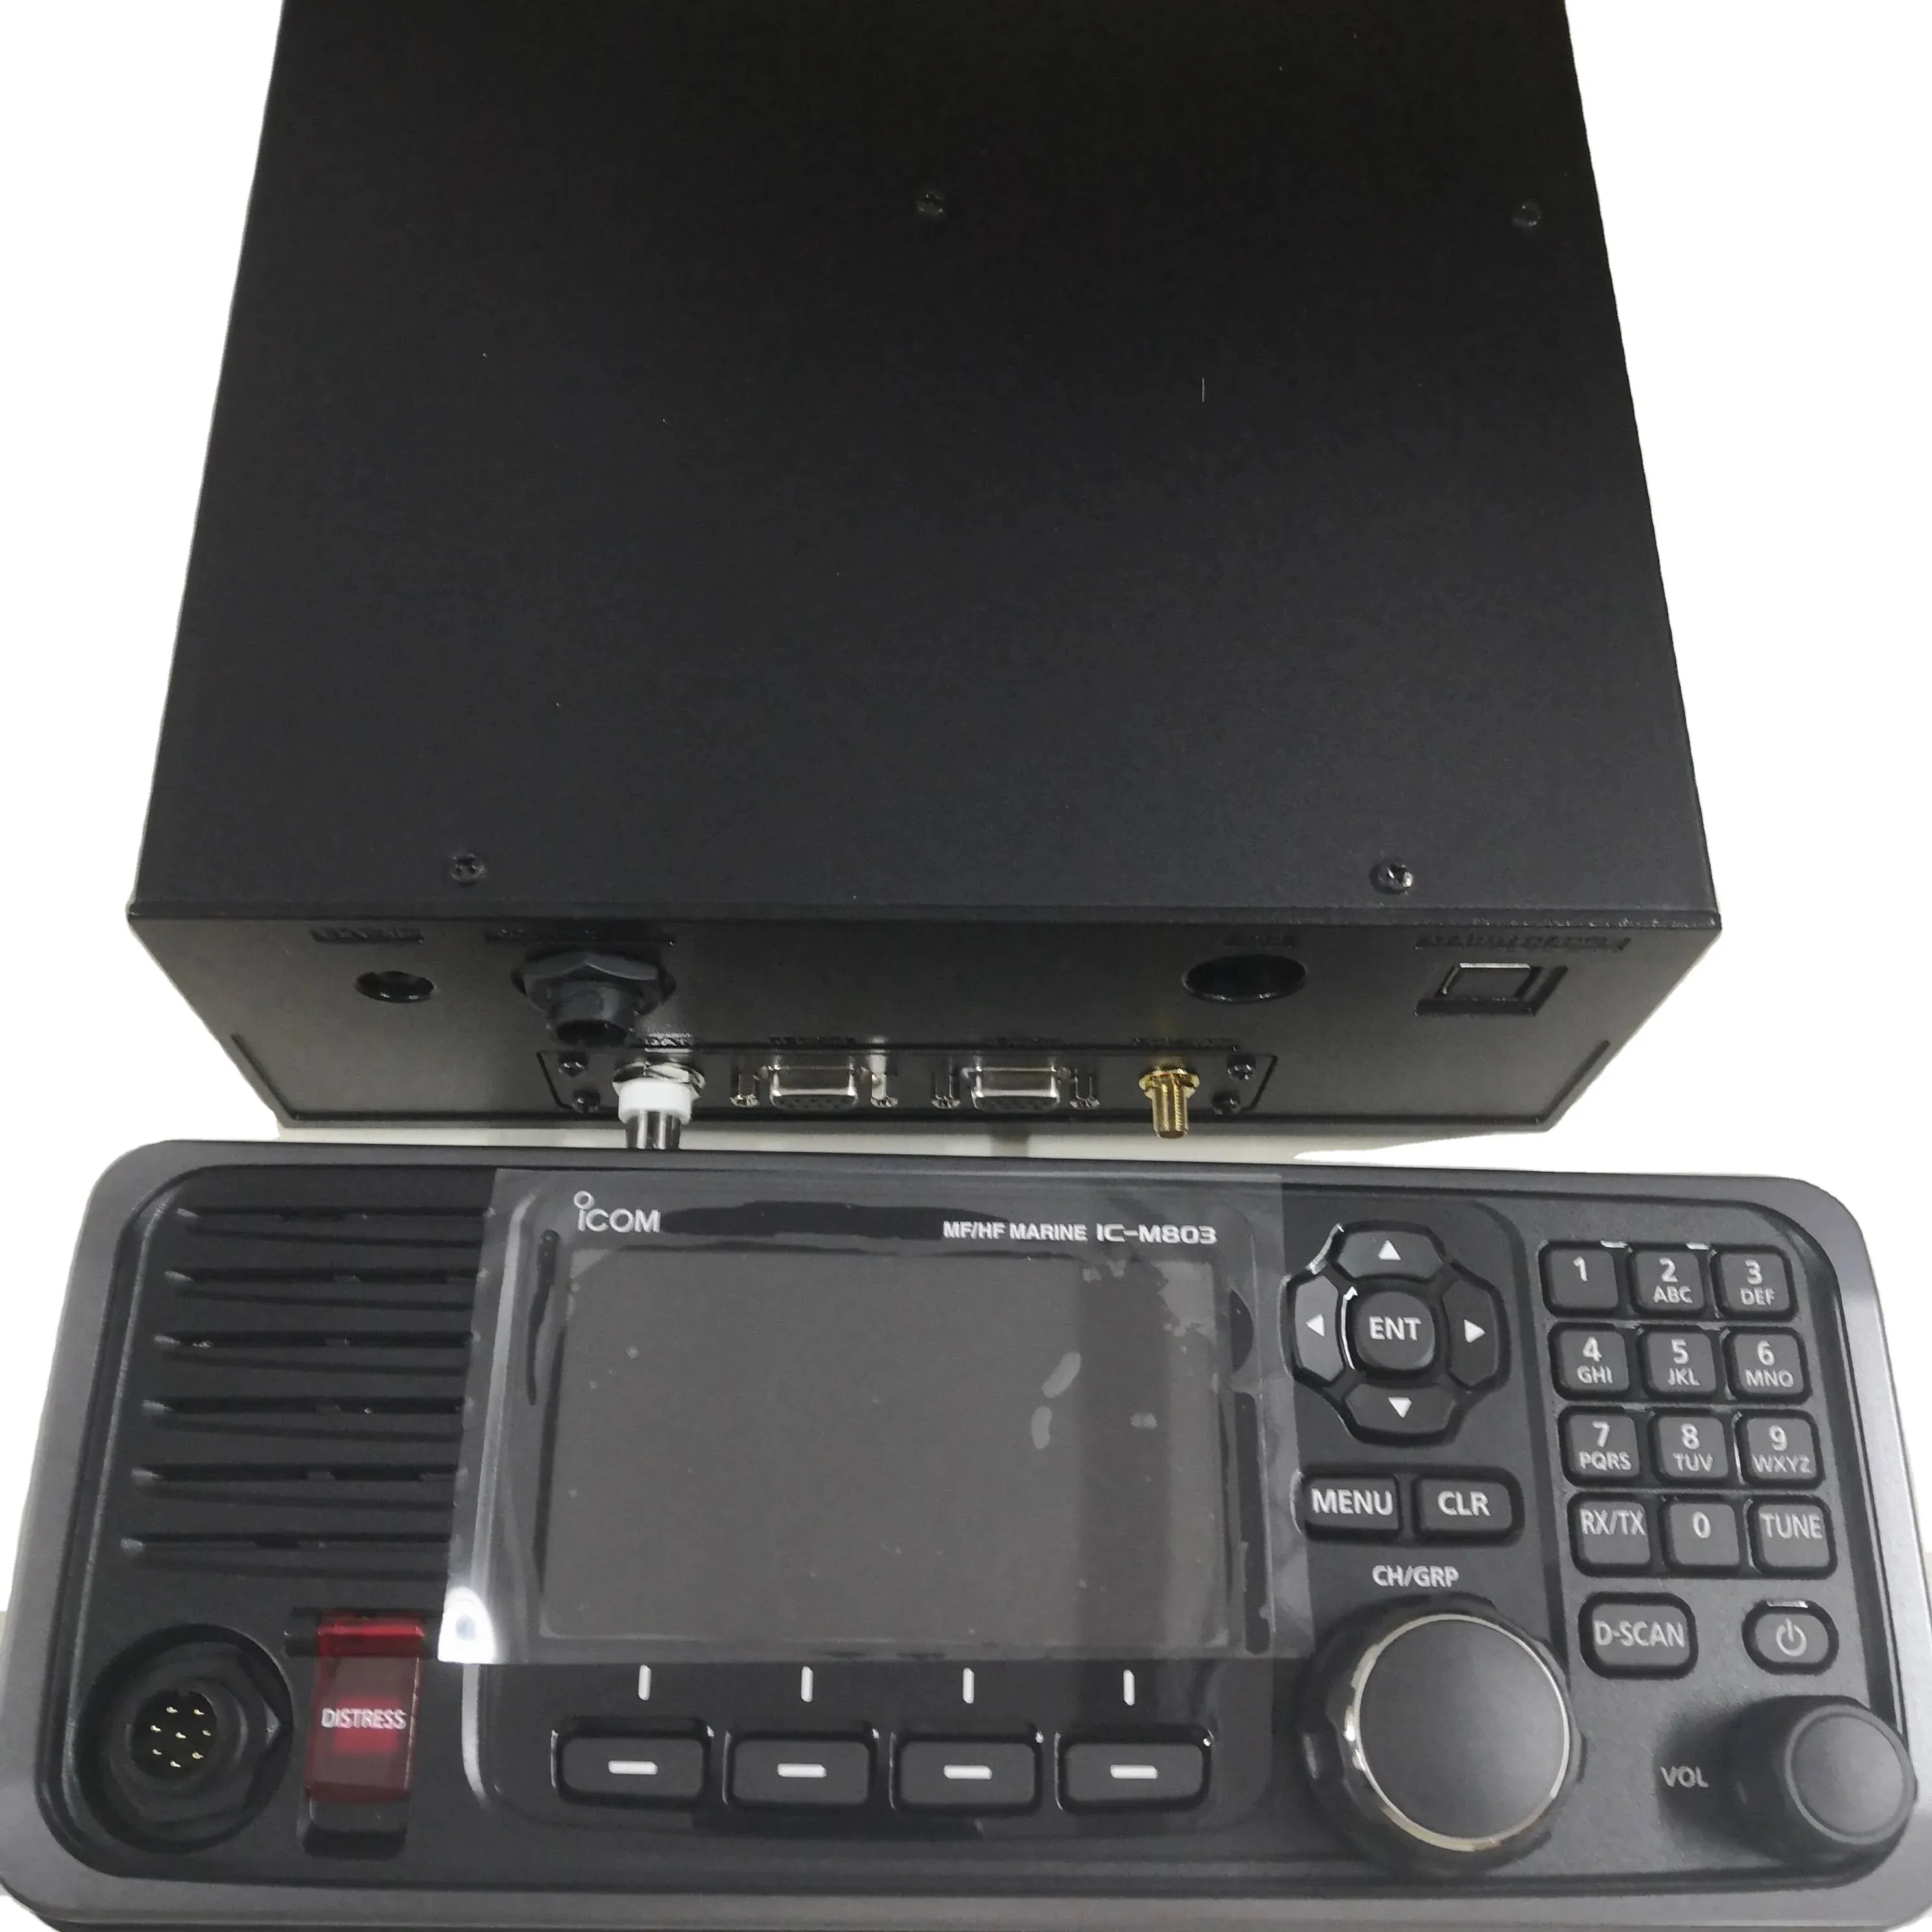 IC-M803 navigasi maritim elektronik laut SSB Icom pemancar-pemancar HF radio laut